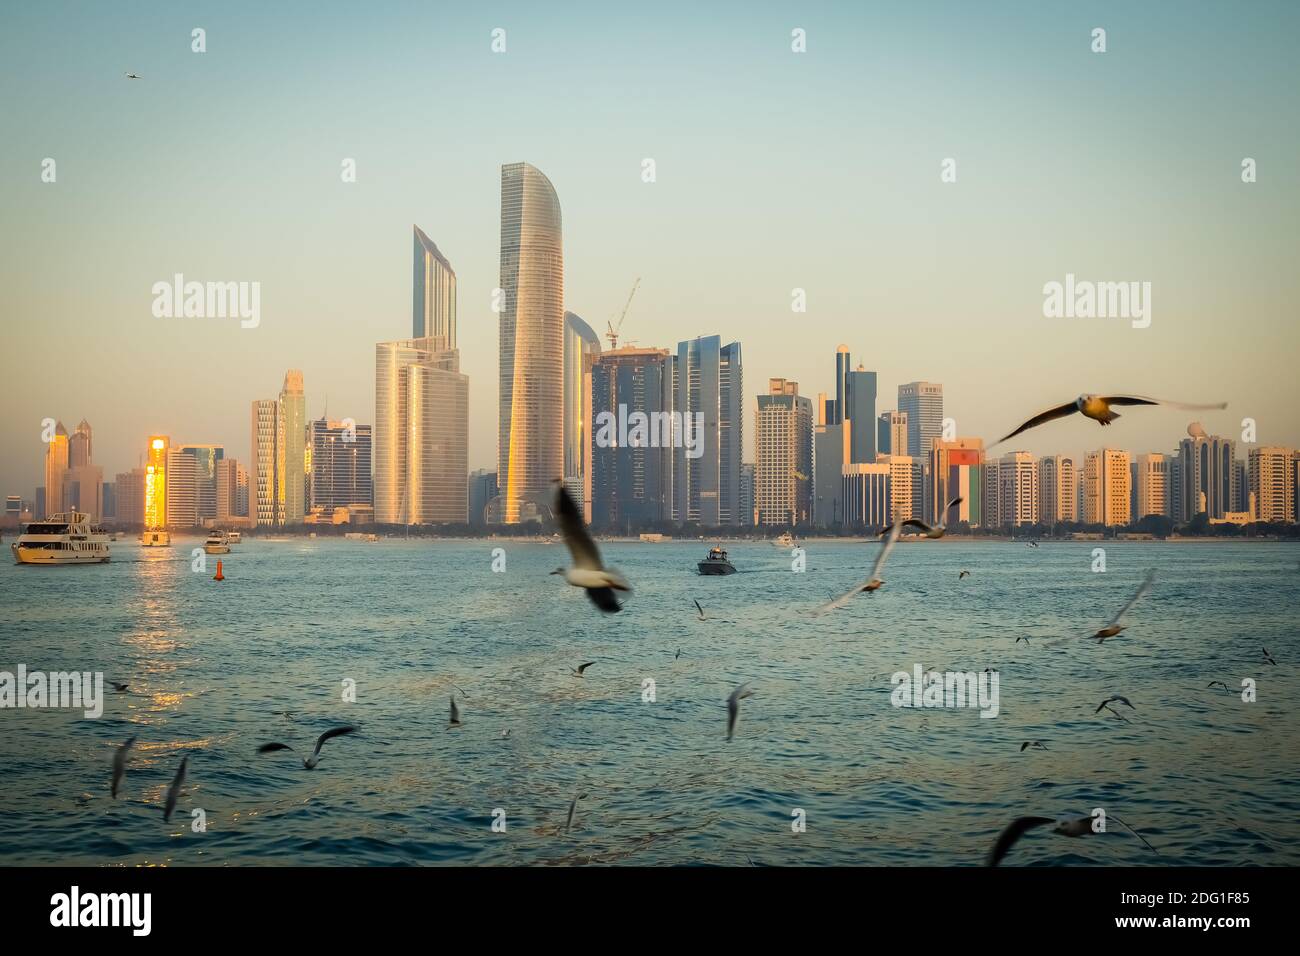 View of Abu Dhabi, United Arab Emirates, the capital city of UAE. Stock Photo